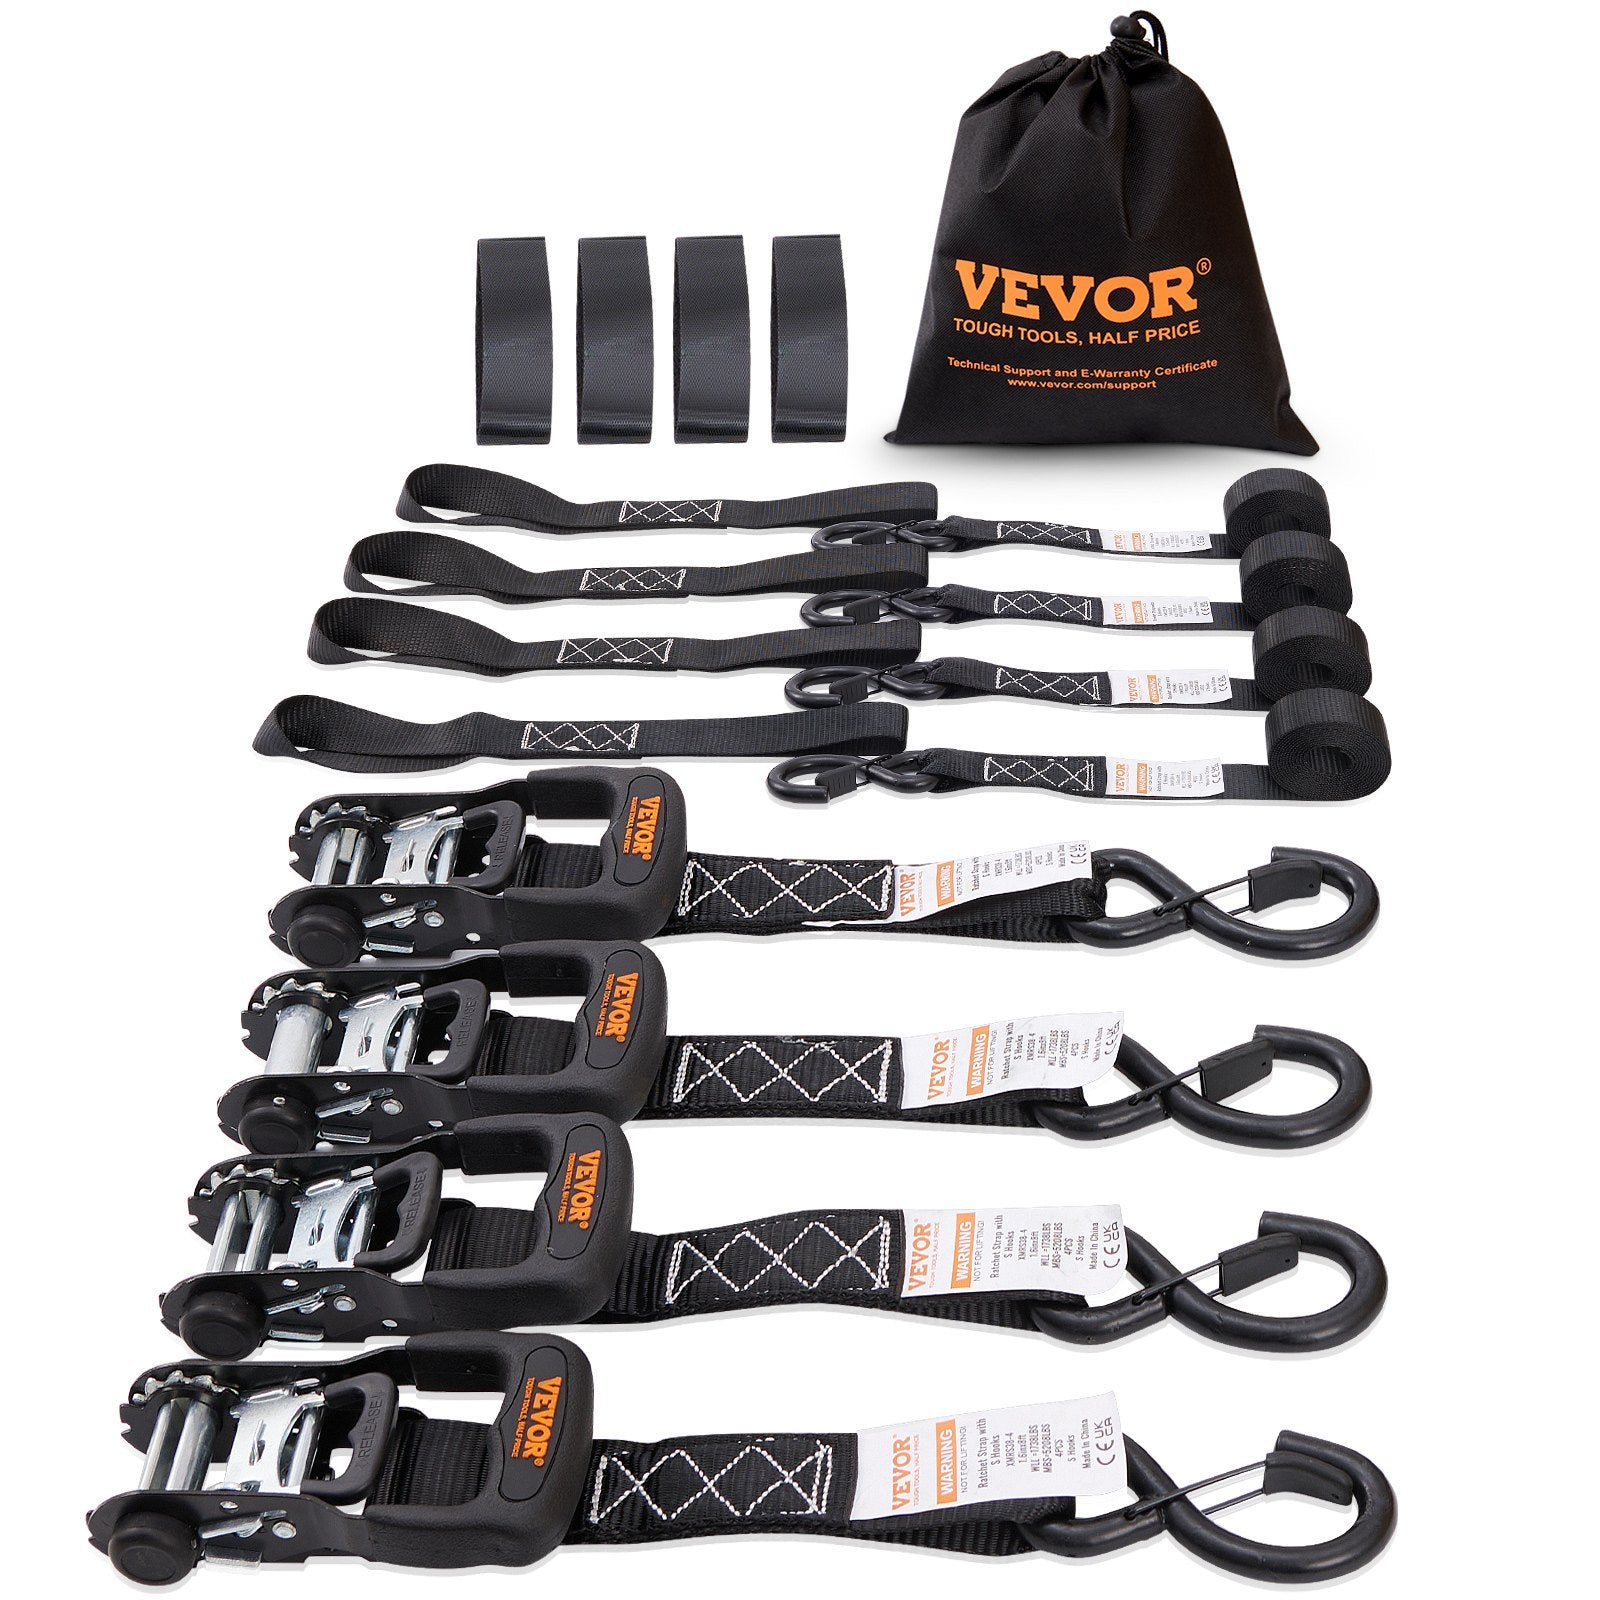 VEVOR Ratchet Tie Down Straps (4PK), 5208 lb Max Break Strength, Includes 4 Premium 1.6" x 8' Rachet Tie Downs with Padded Handles